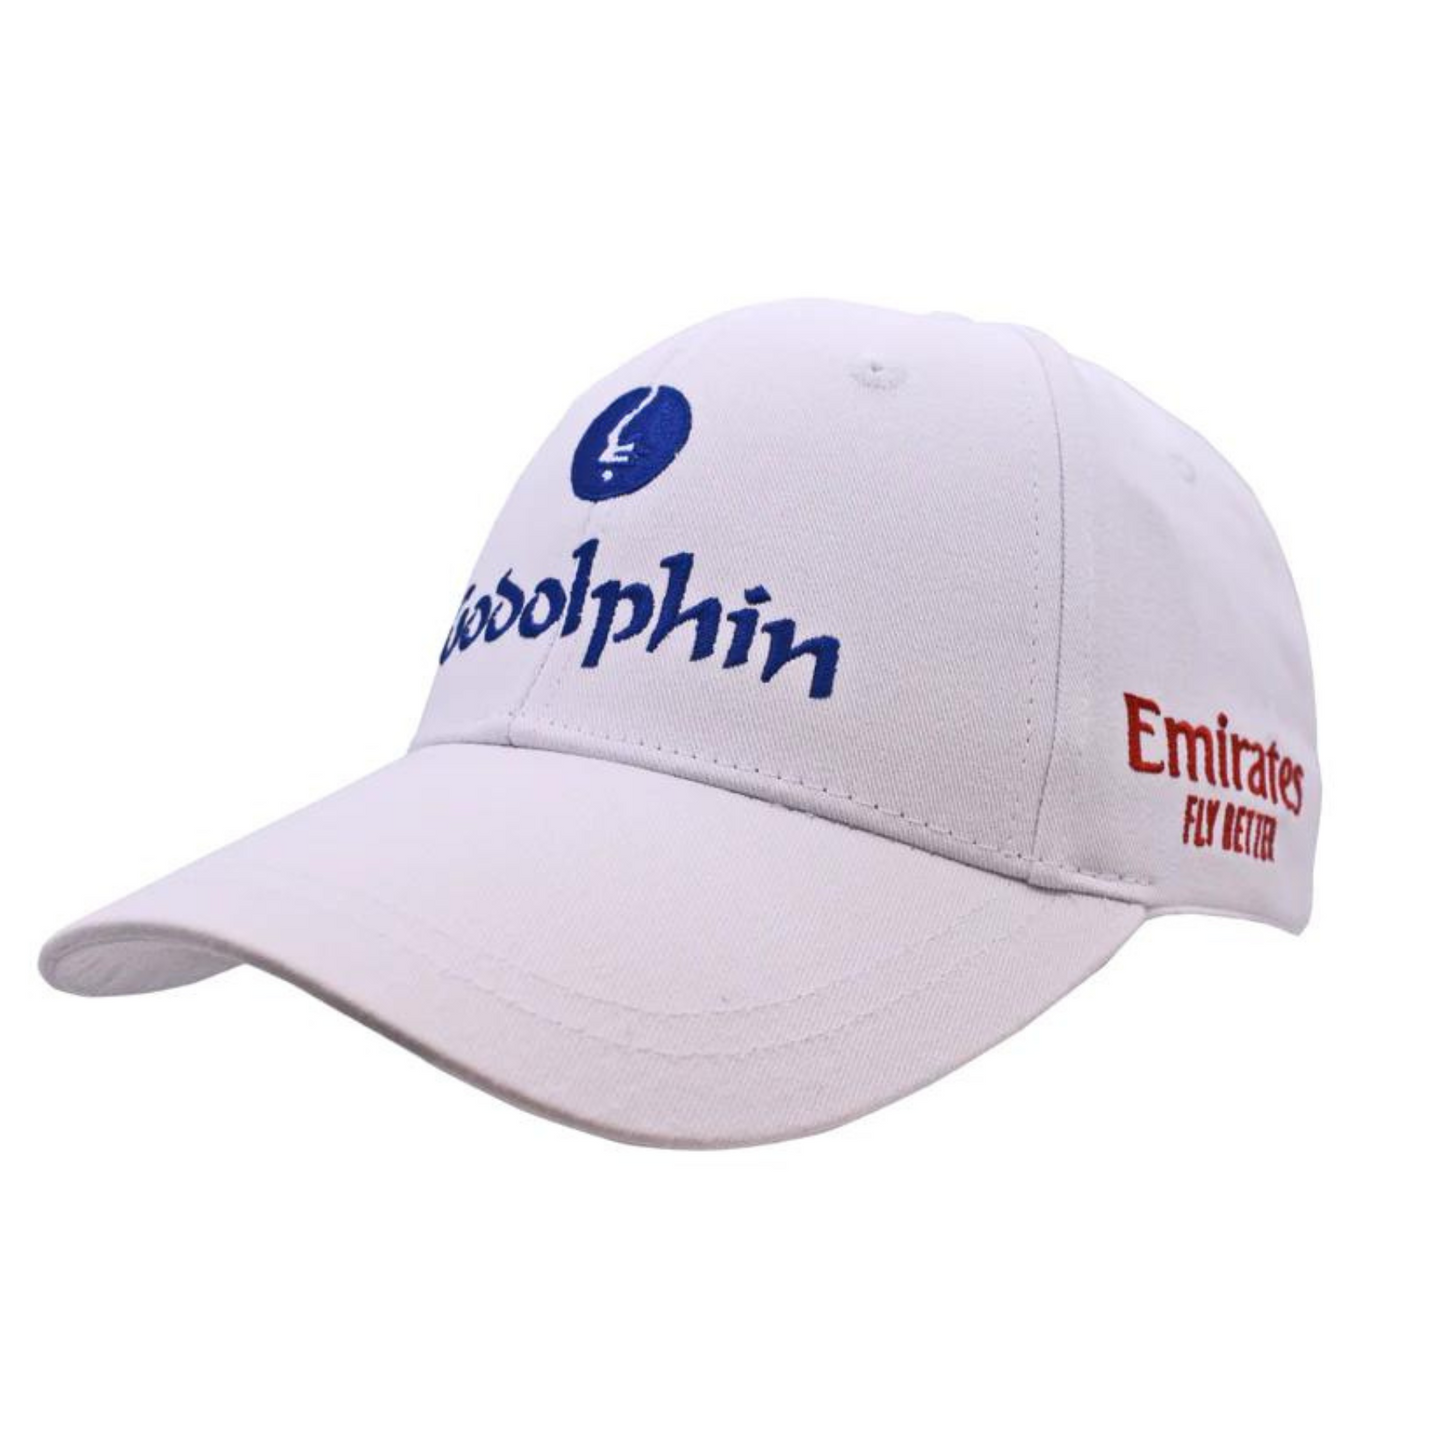 Godolphin Baseball Cap - White